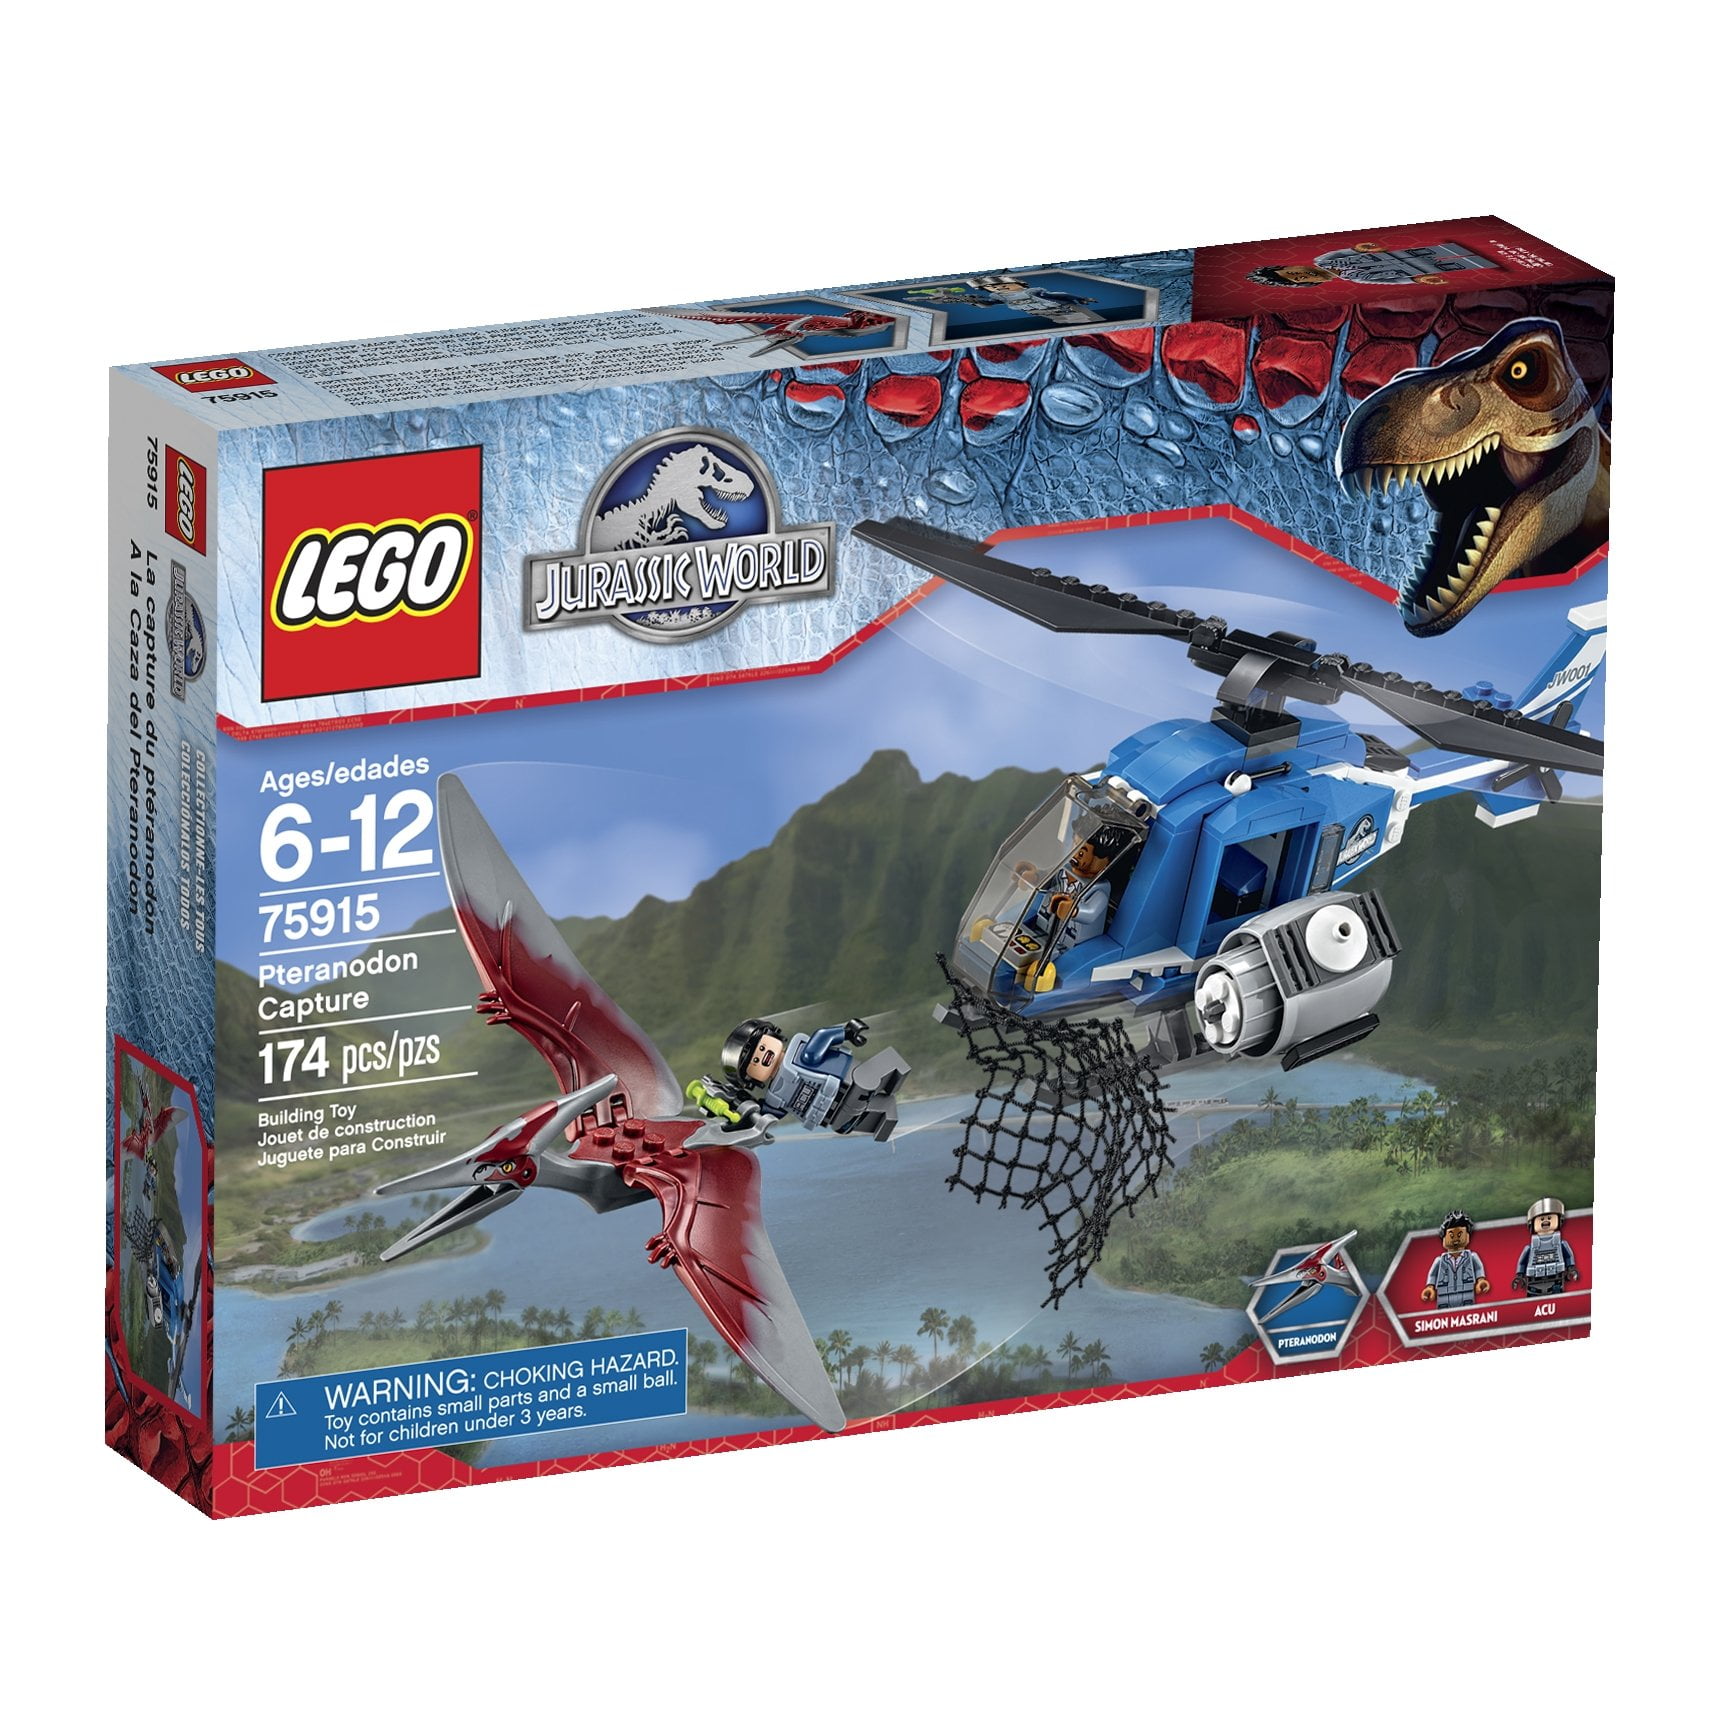 LEGO Jurassic World Pteranodon Capture 75915 (Slighty Shop Worn) -